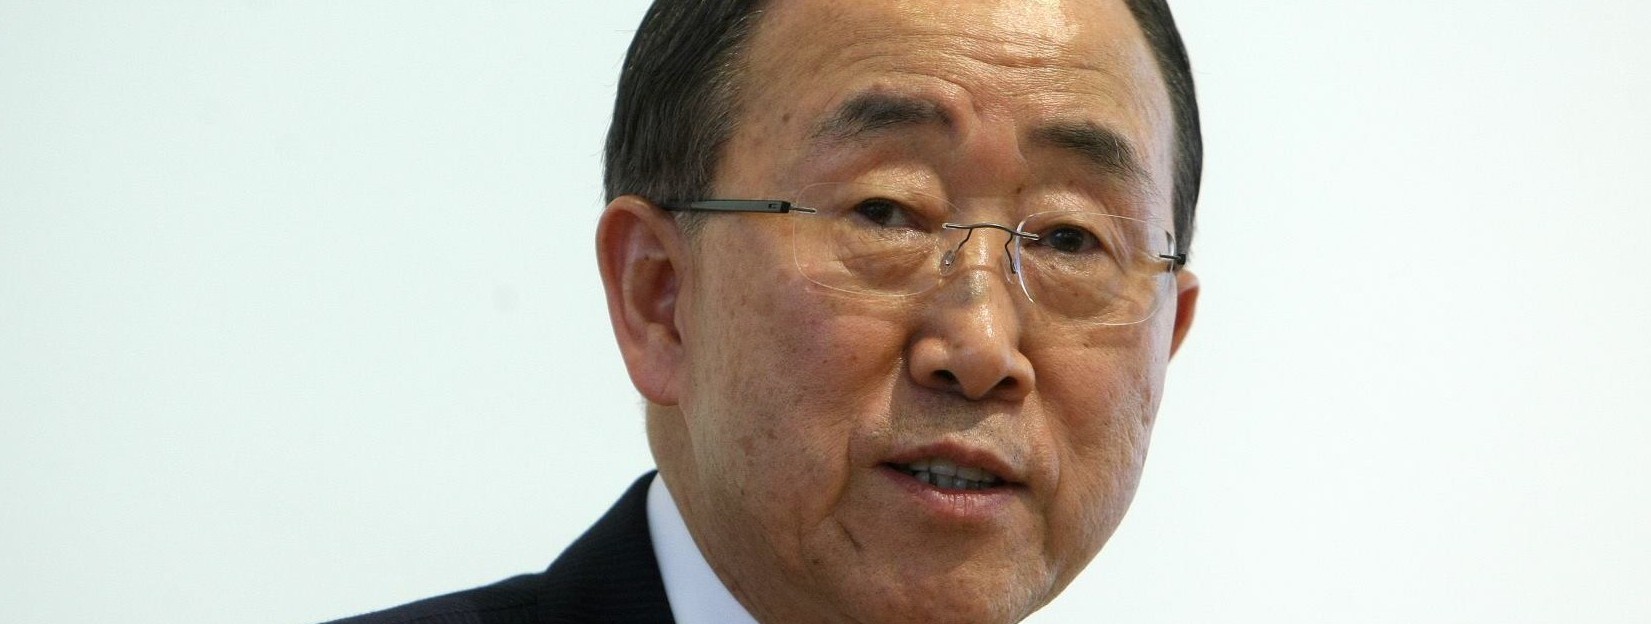 VIDEO: Ban Ki-moon zadovoljan dosadašnjim razgovorima na Pariškoj klimatskoj konferenciji